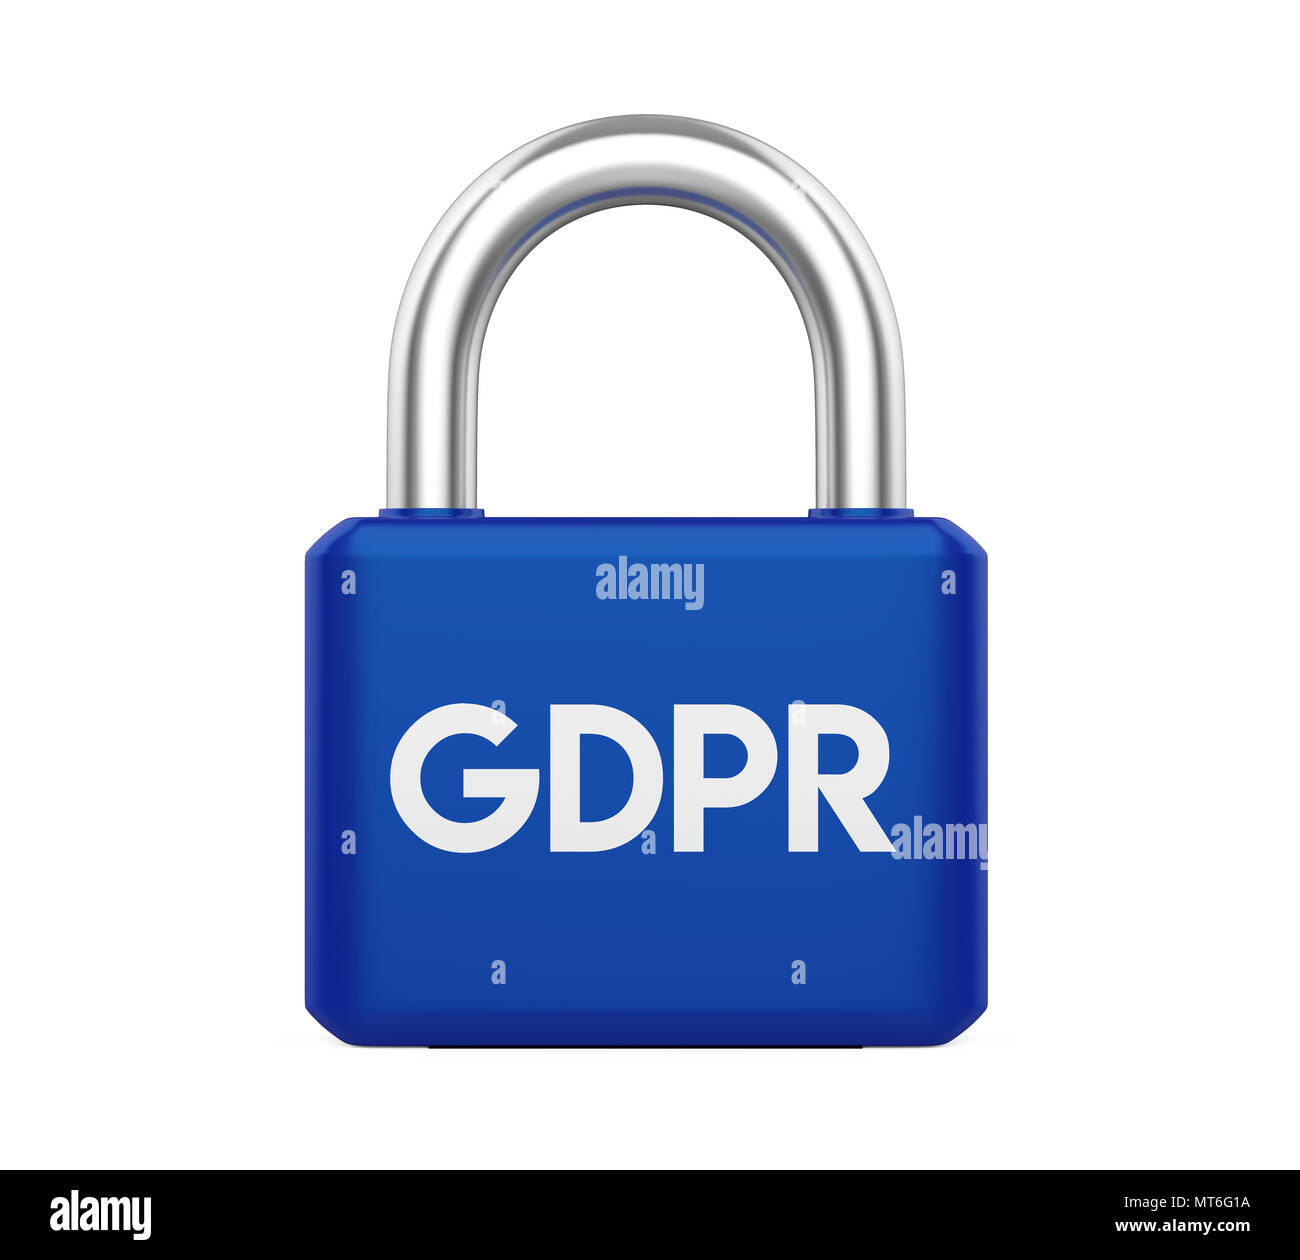 GDPR - General Data Protection Regulation Illustration Stock Photo